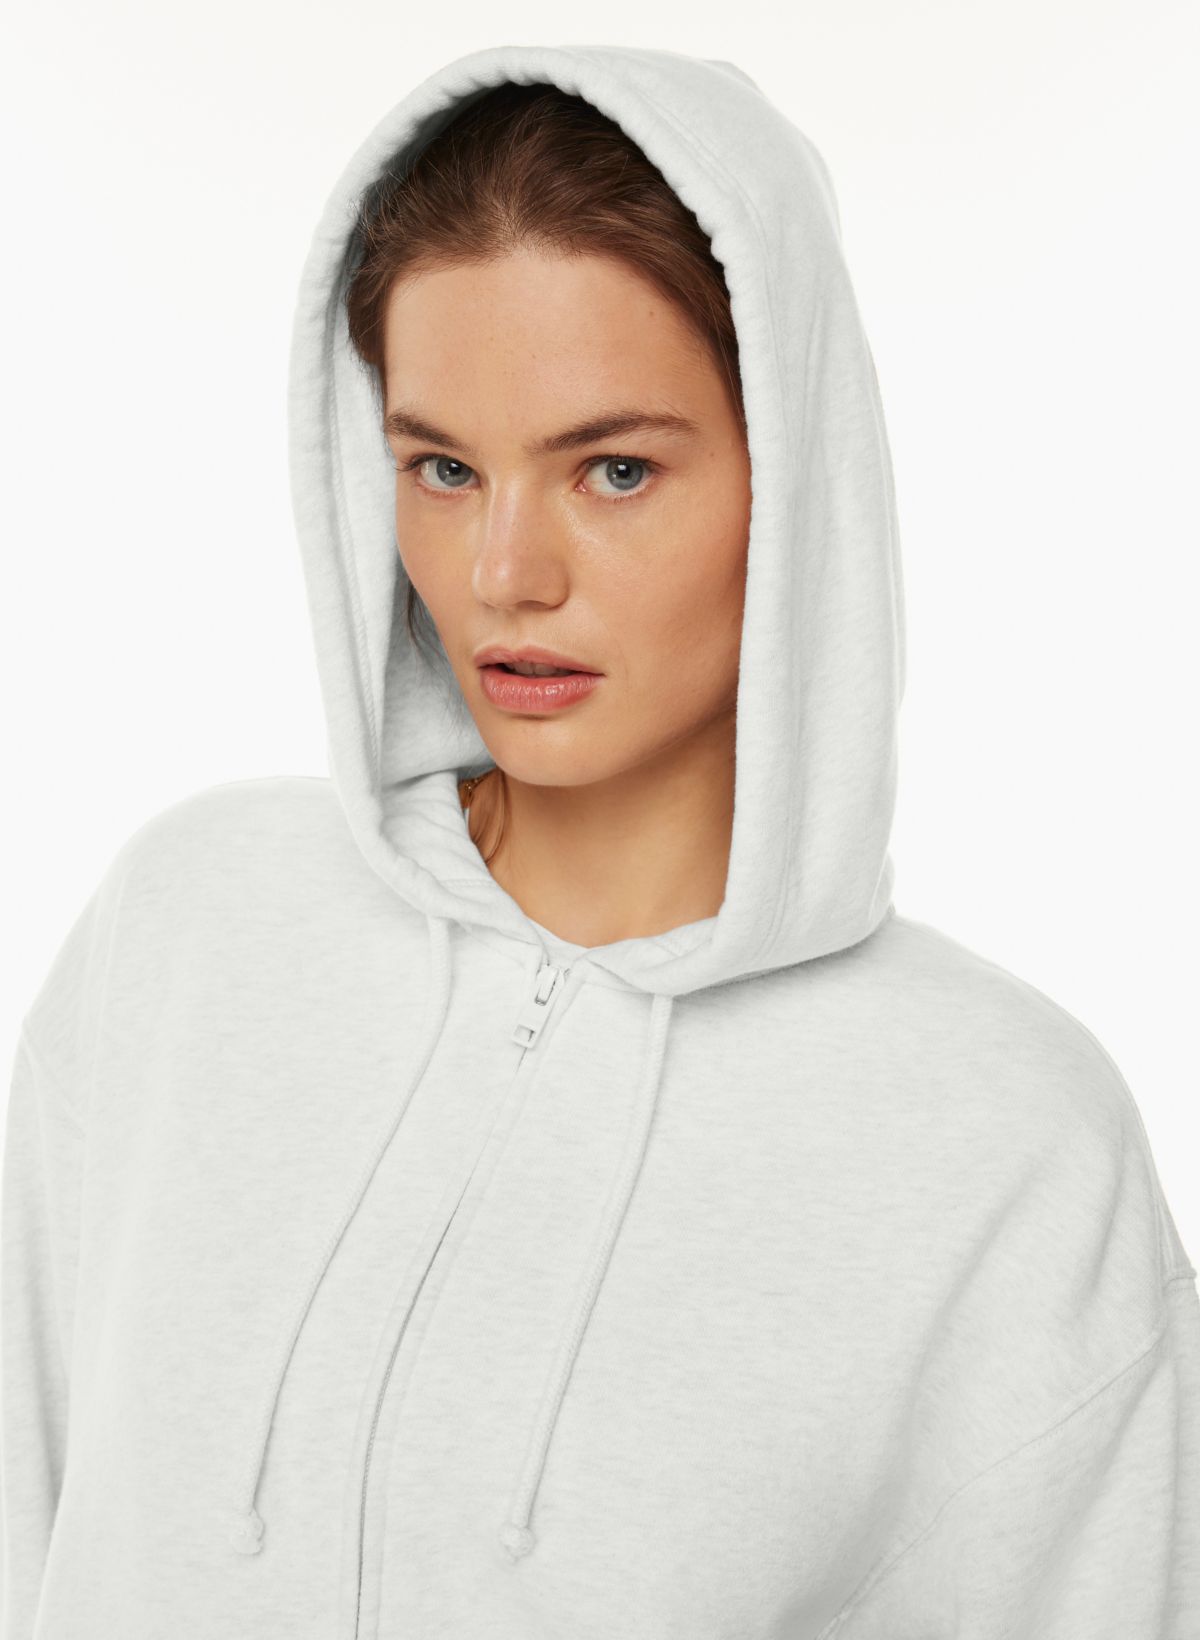 Women's Merino Wool Hoodies and Pullovers - Warmest Sweatshirts In